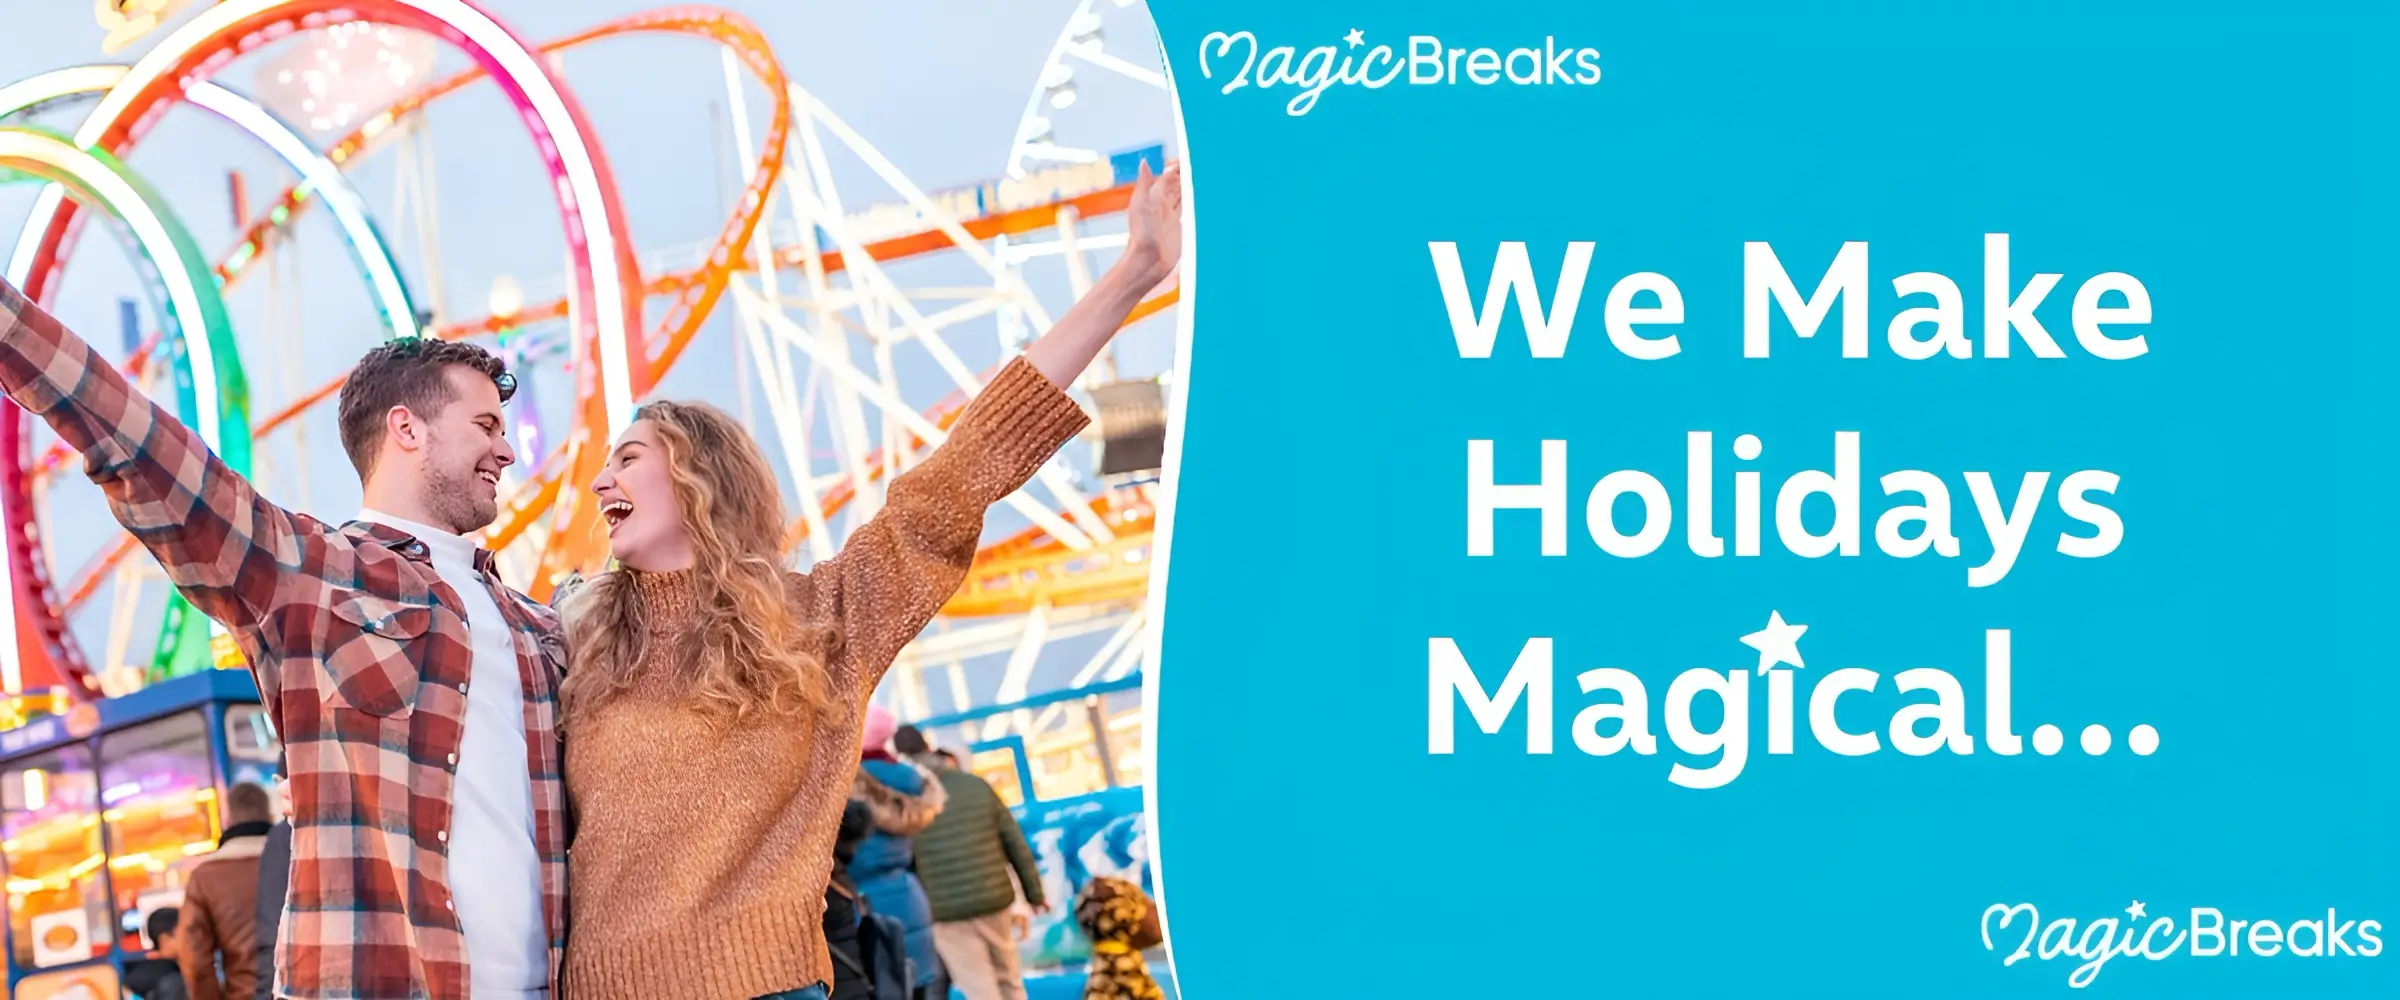 MagicBreaks We Make Holidays Magical... carousel banner